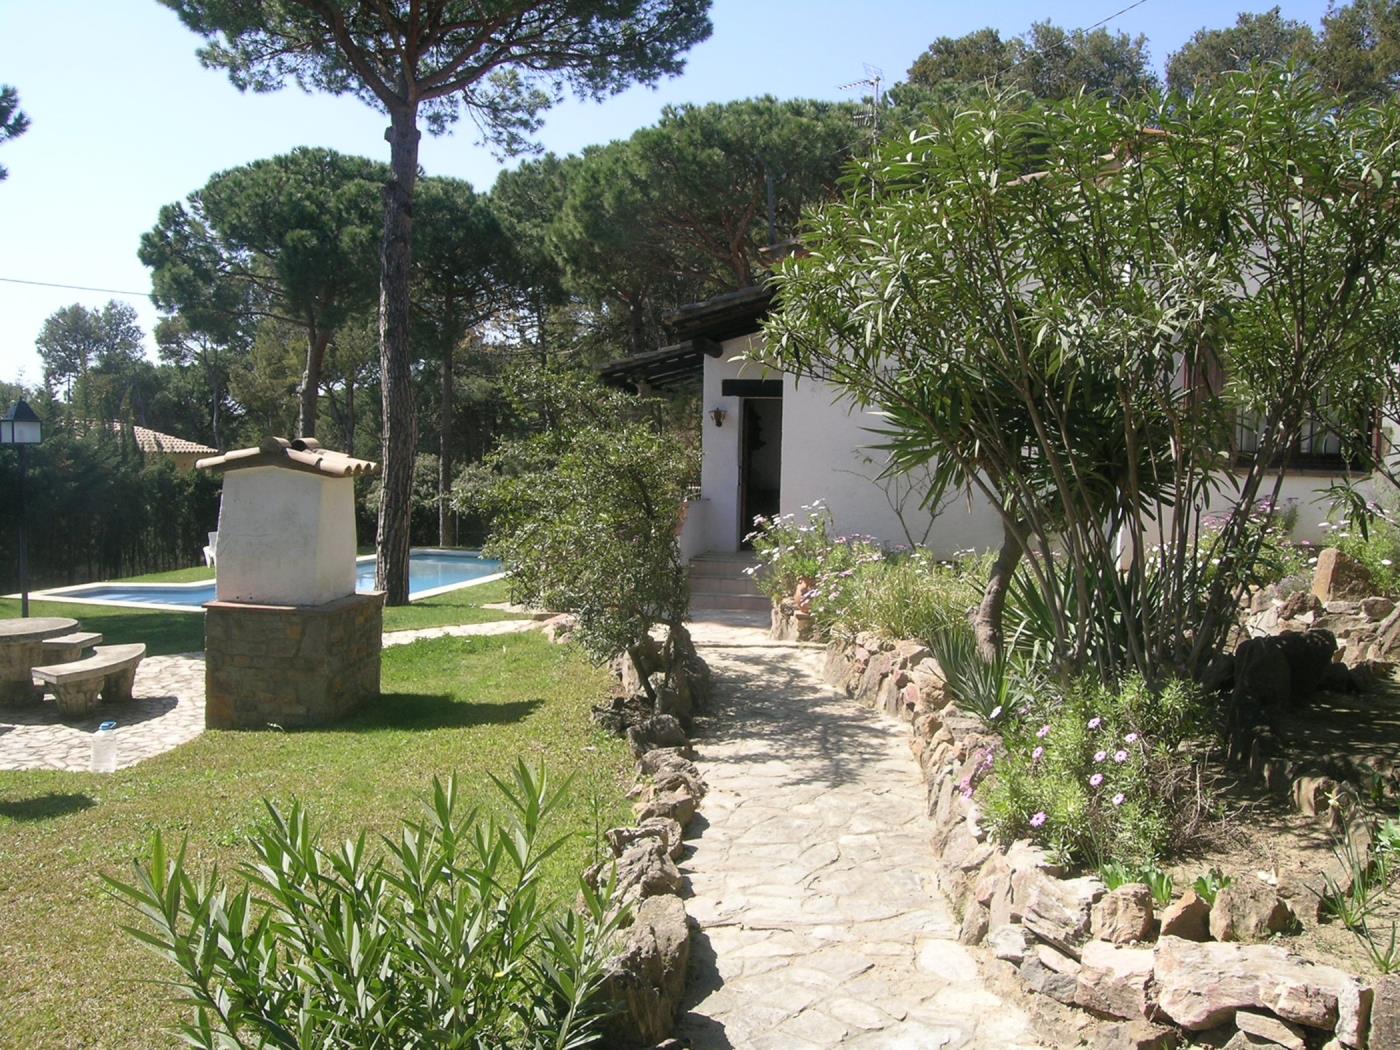 Casa Chifranca, Begur, Costa Brava in begur